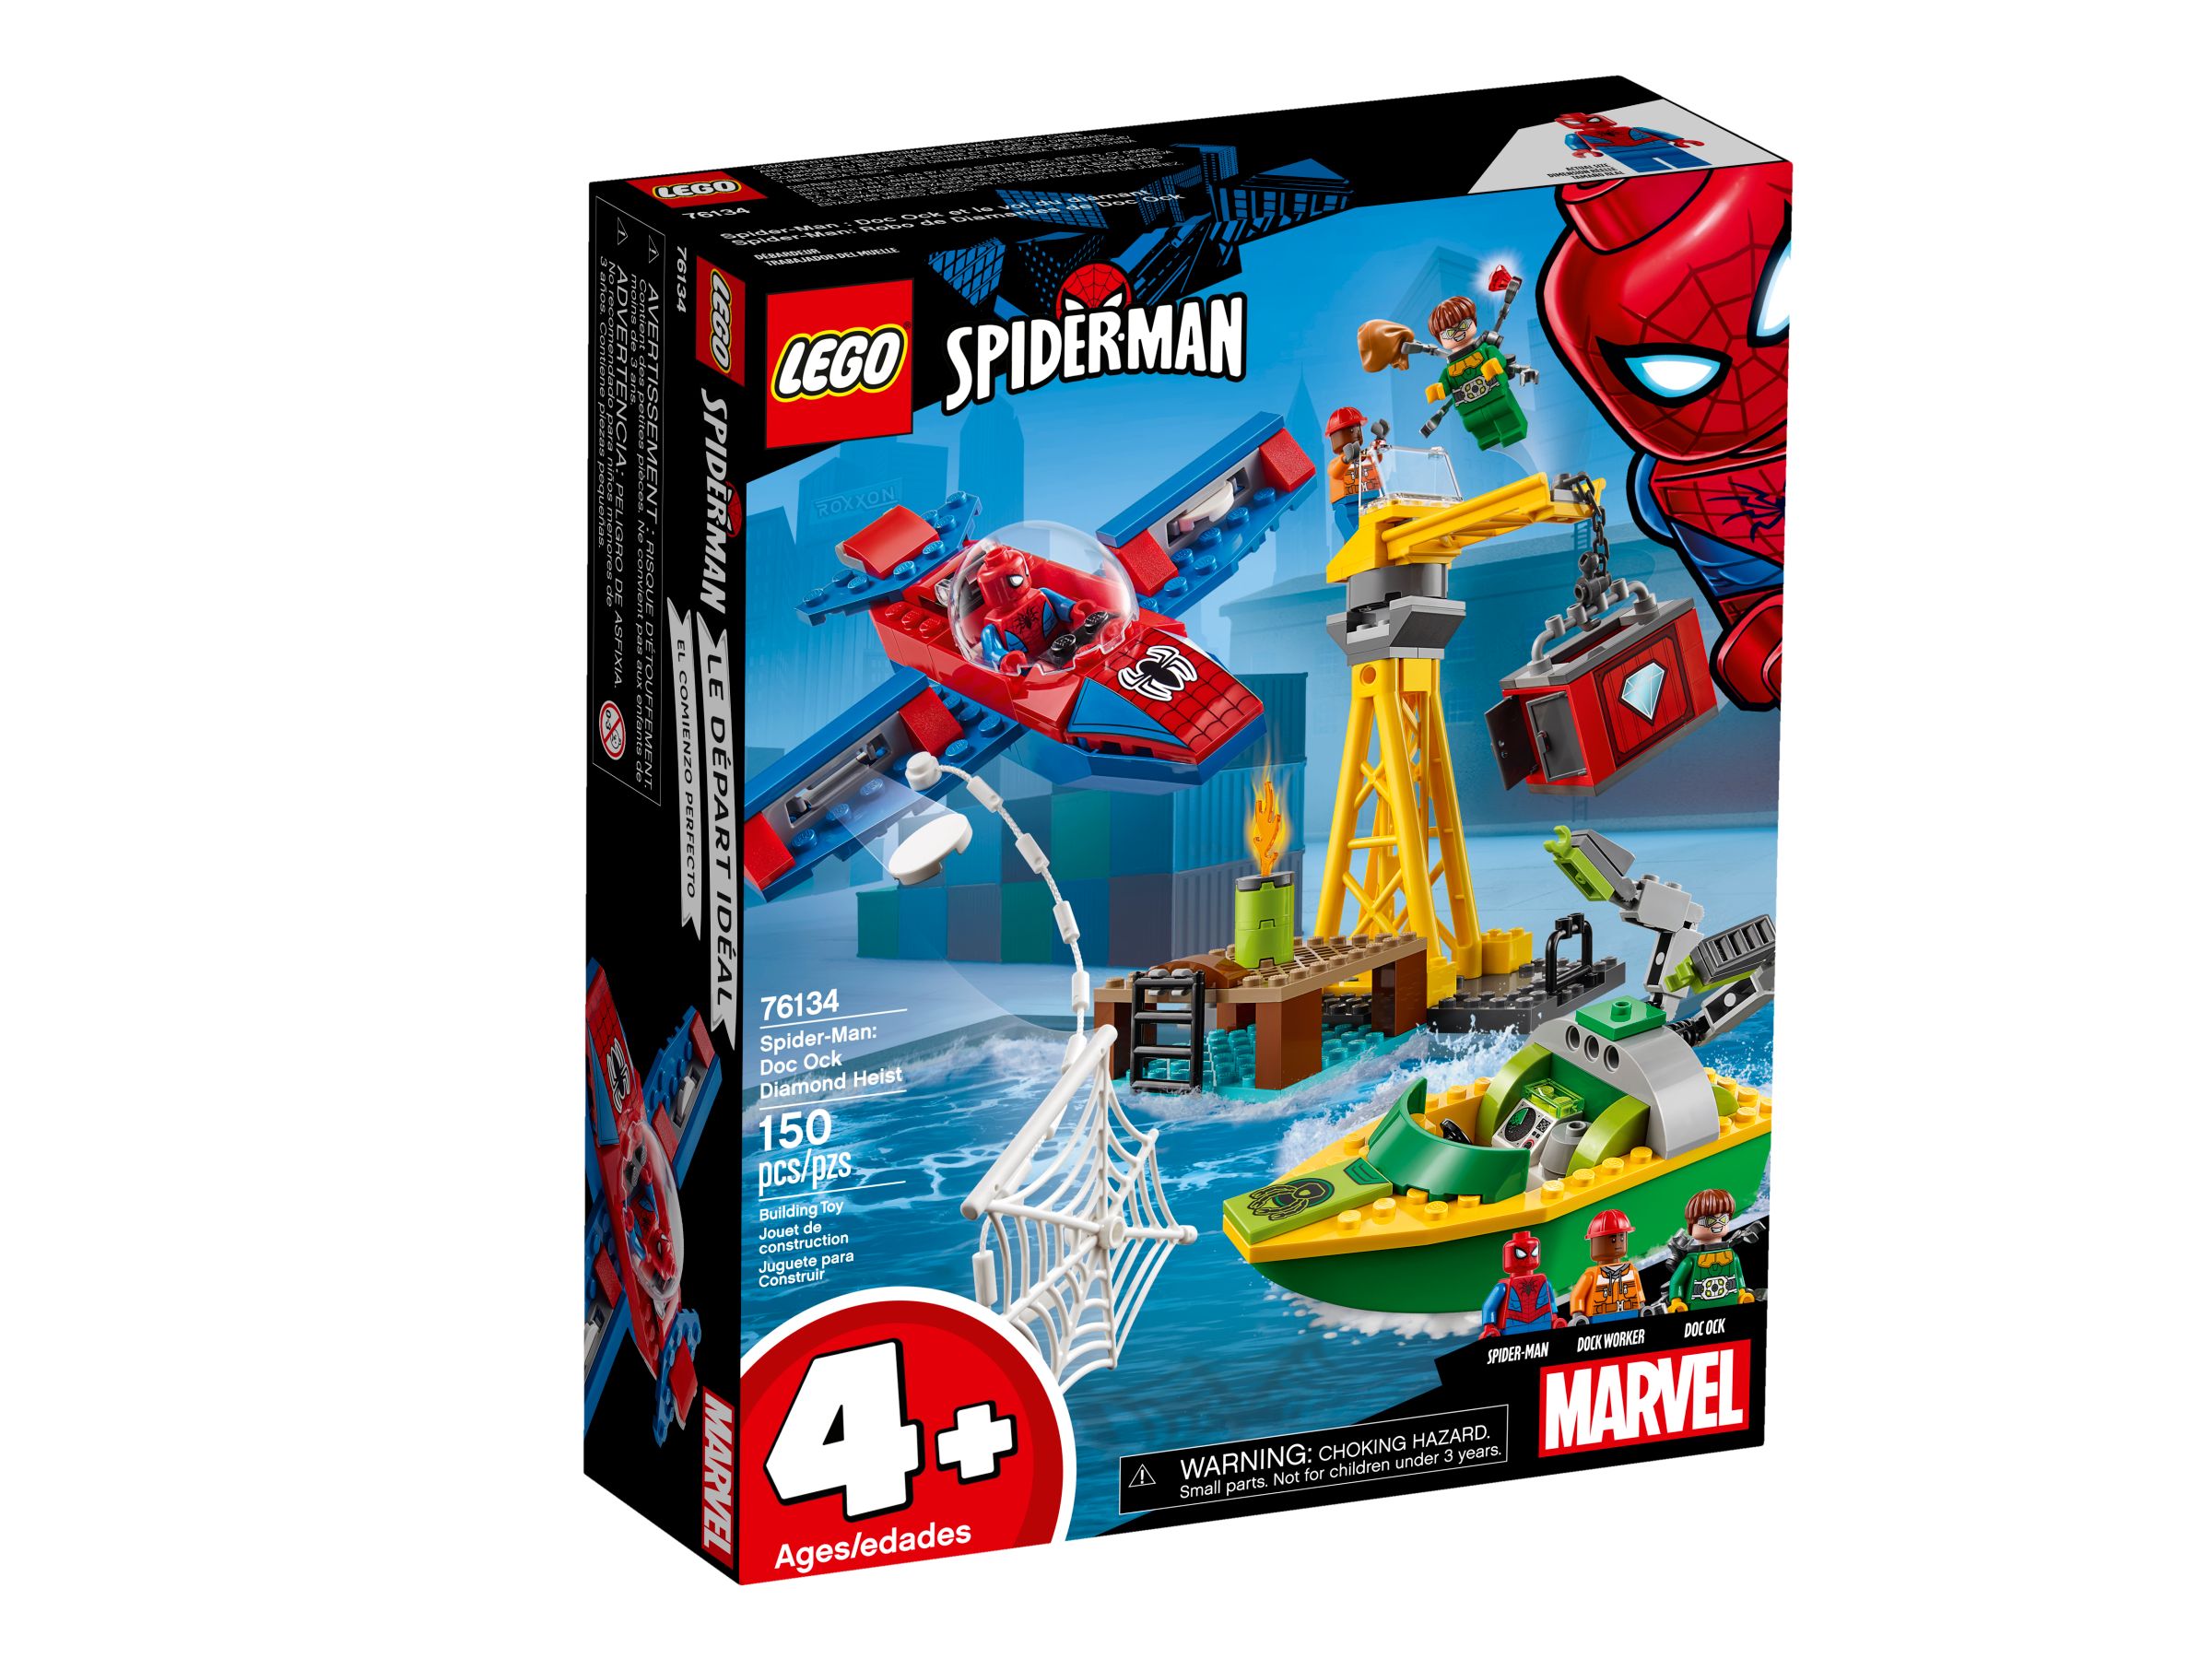 LEGO Super Heroes 76134 Spider-Man: Dock Ock Diamond LEGO_76134_alt1.jpg